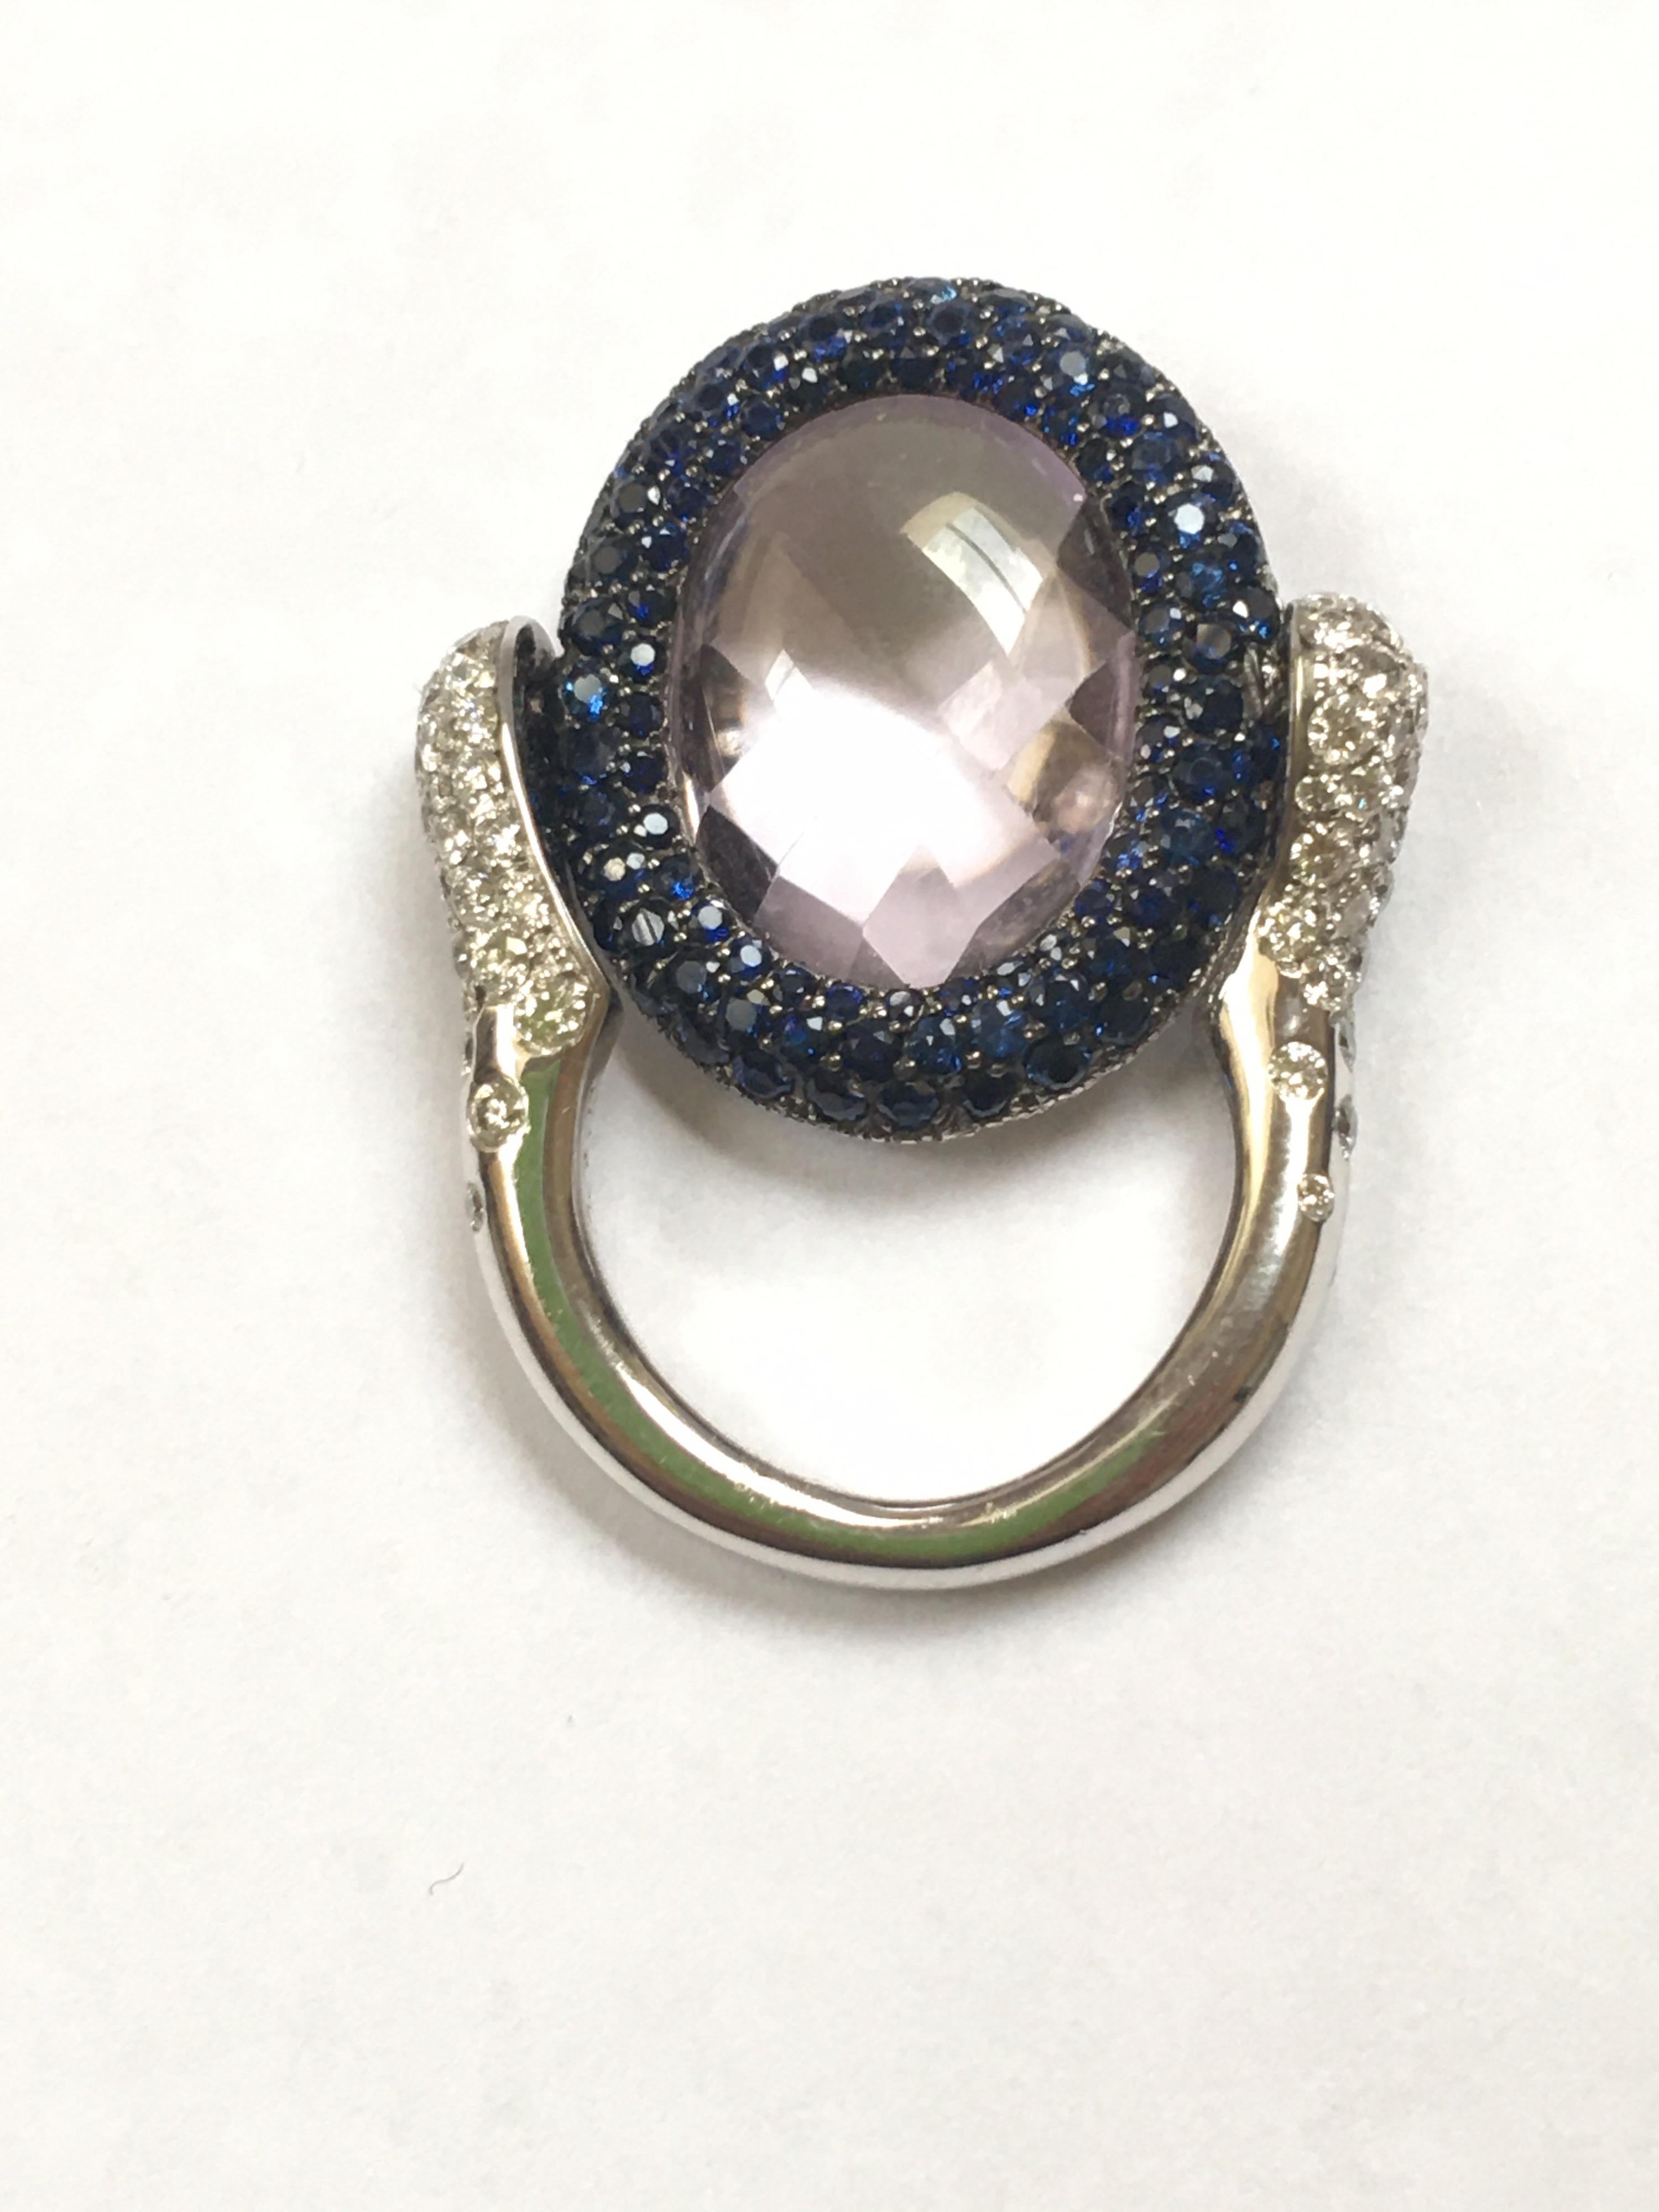 Diamond Sapphire Kunzite Rotating Ring de Grisogono 18 Karat White Gold 4